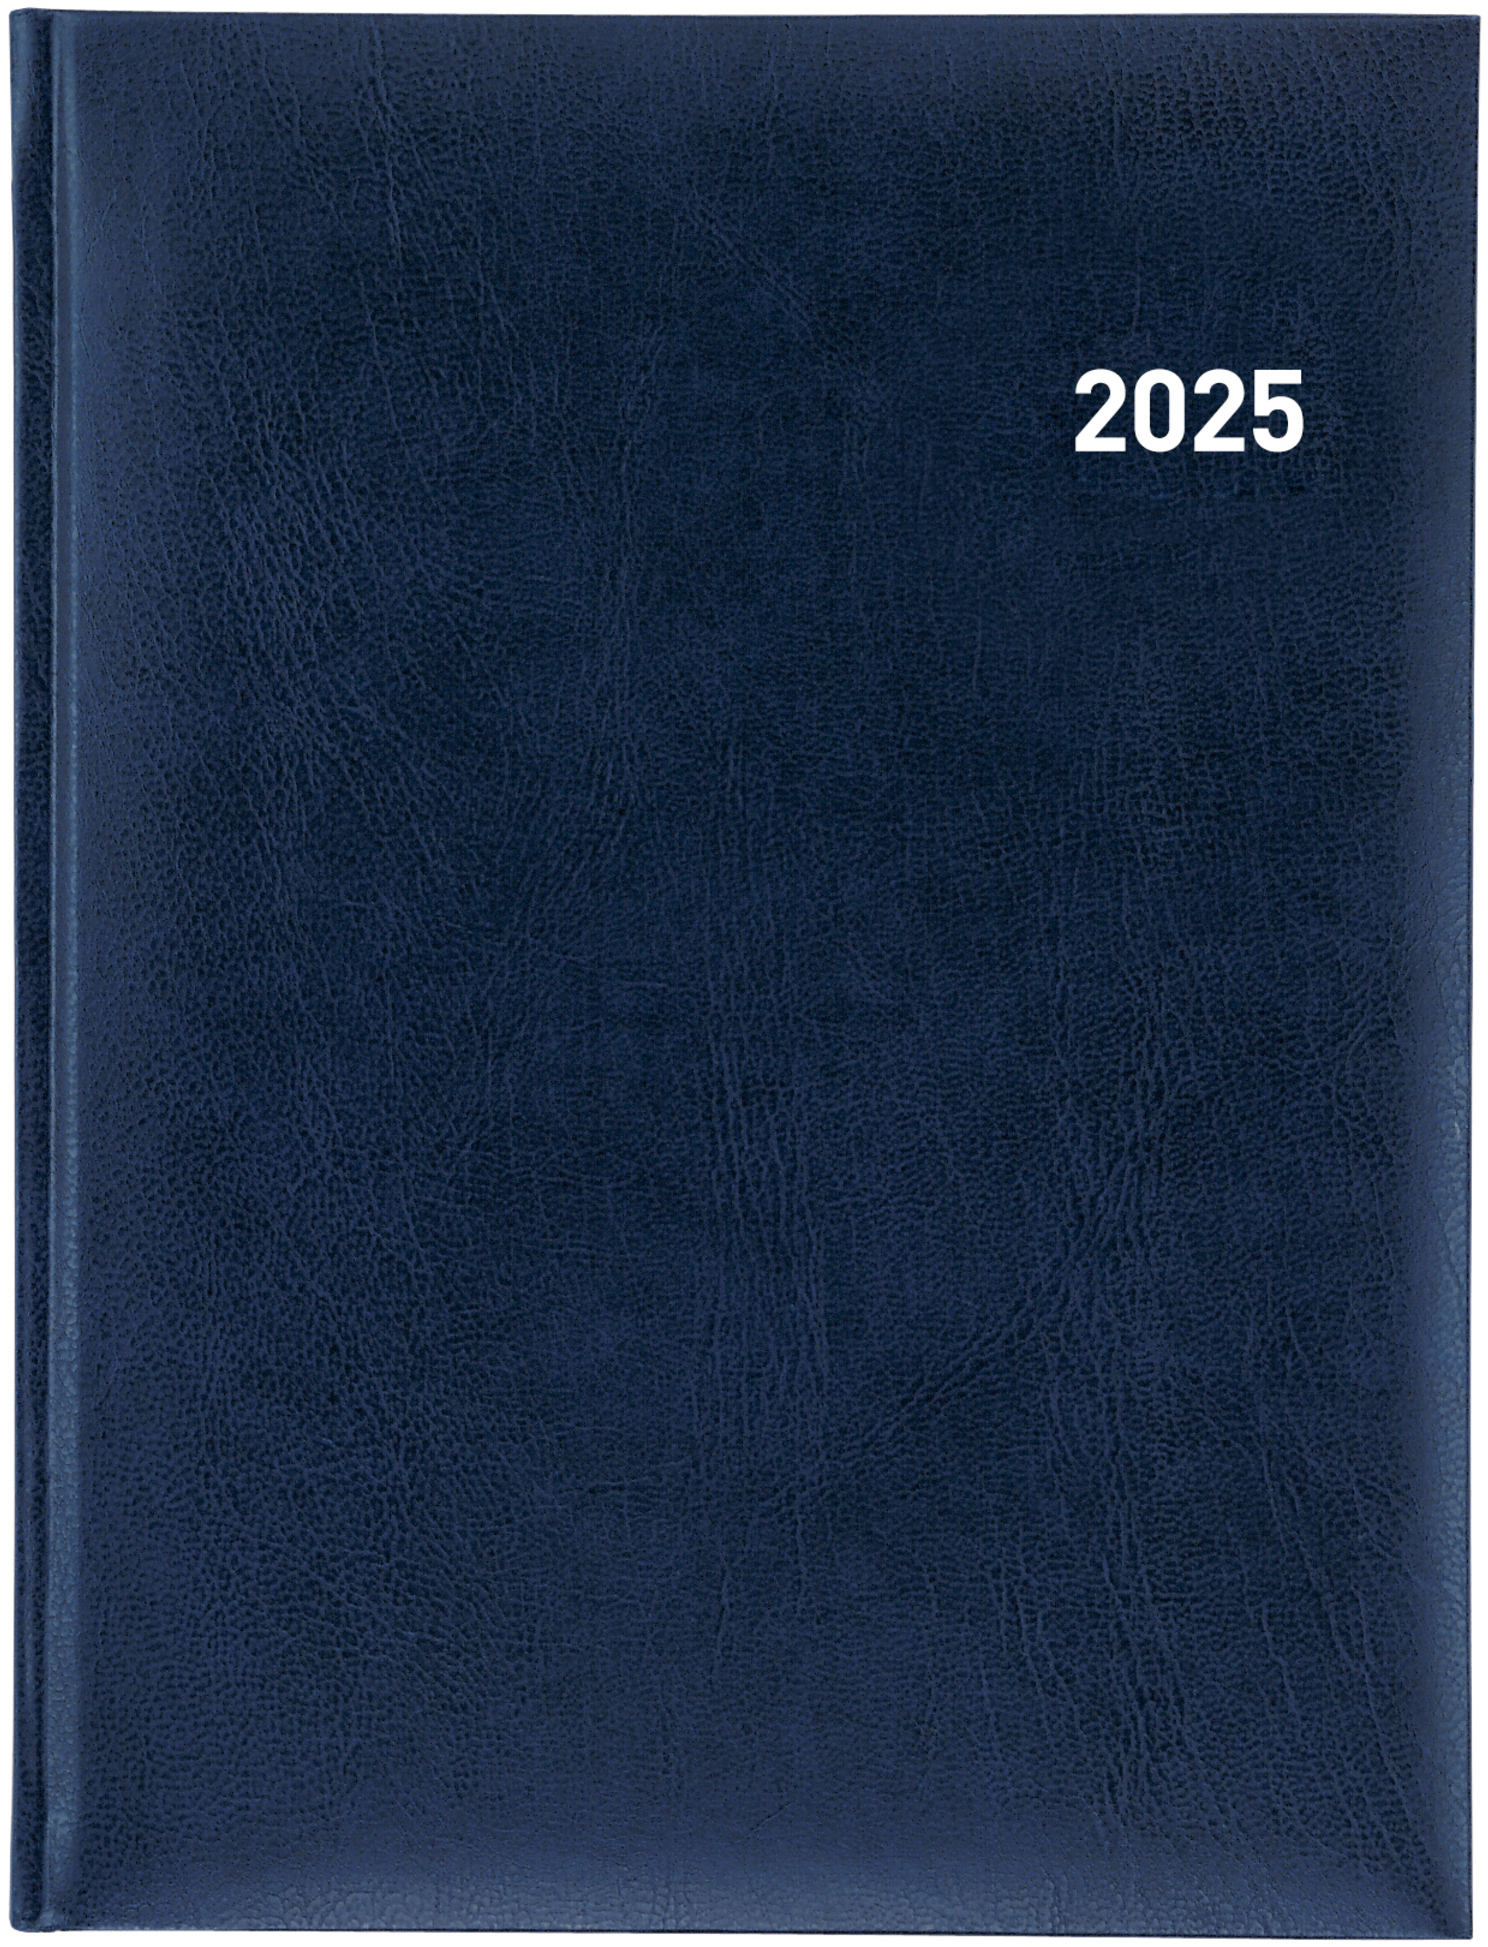 BIELLA Agenda Orario 2025 809301050025 1S/2P bleu ML 17.8x23.5cm